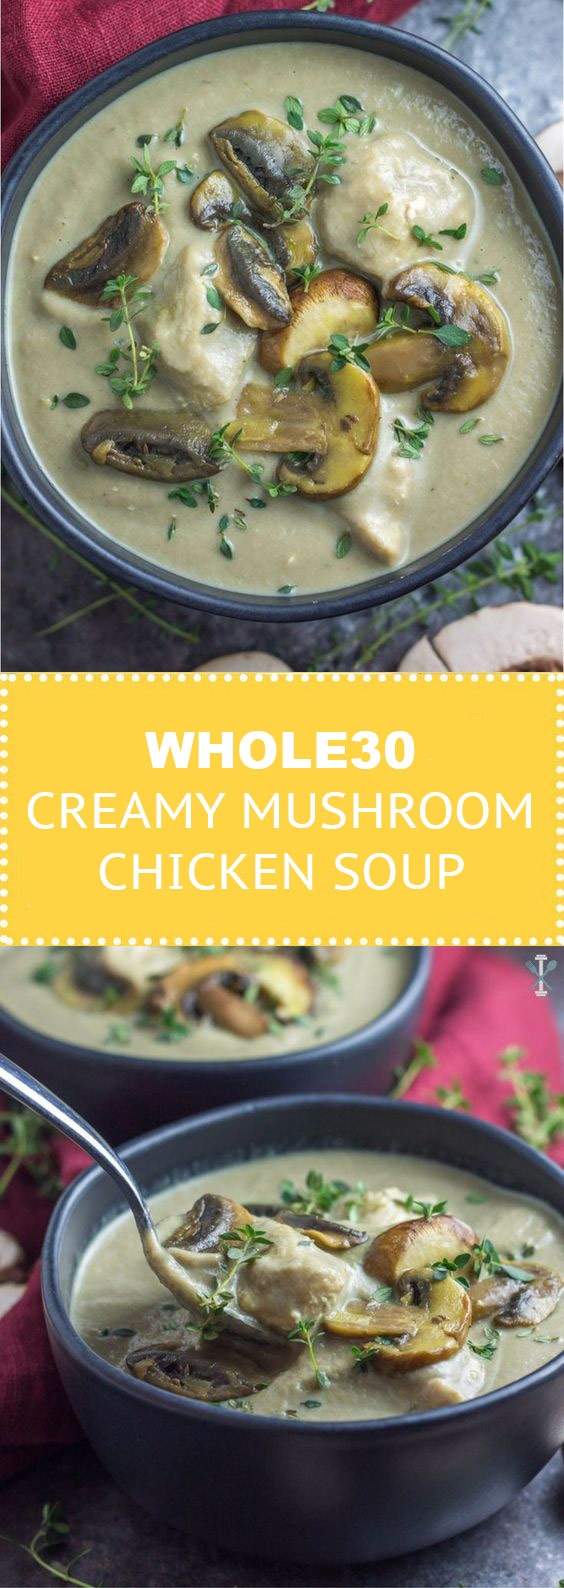 Whole30 Creamy Mushroom Chicken Soup